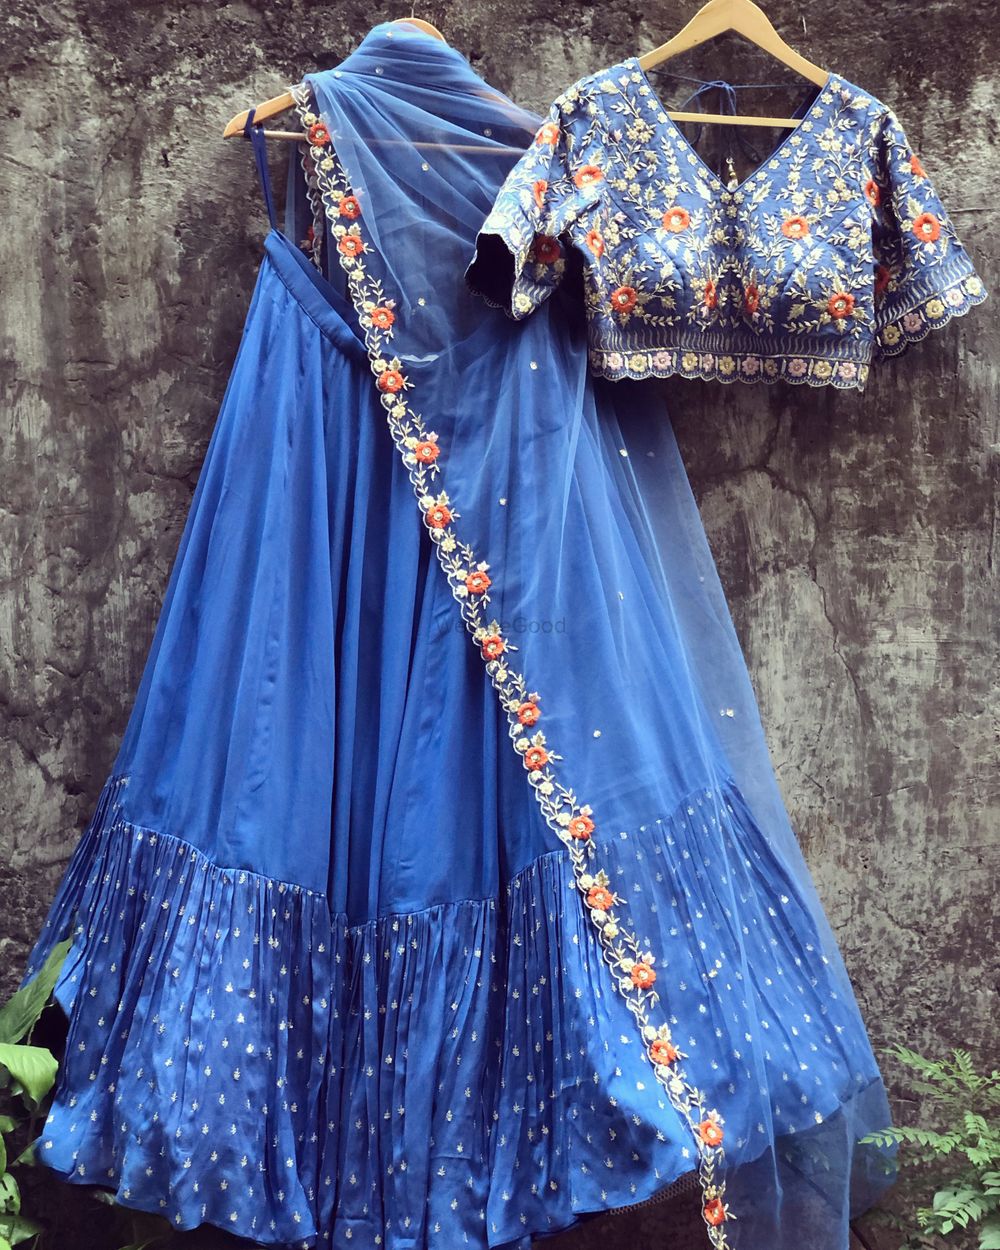 Photo By Miloni Shah - Bridal Wear